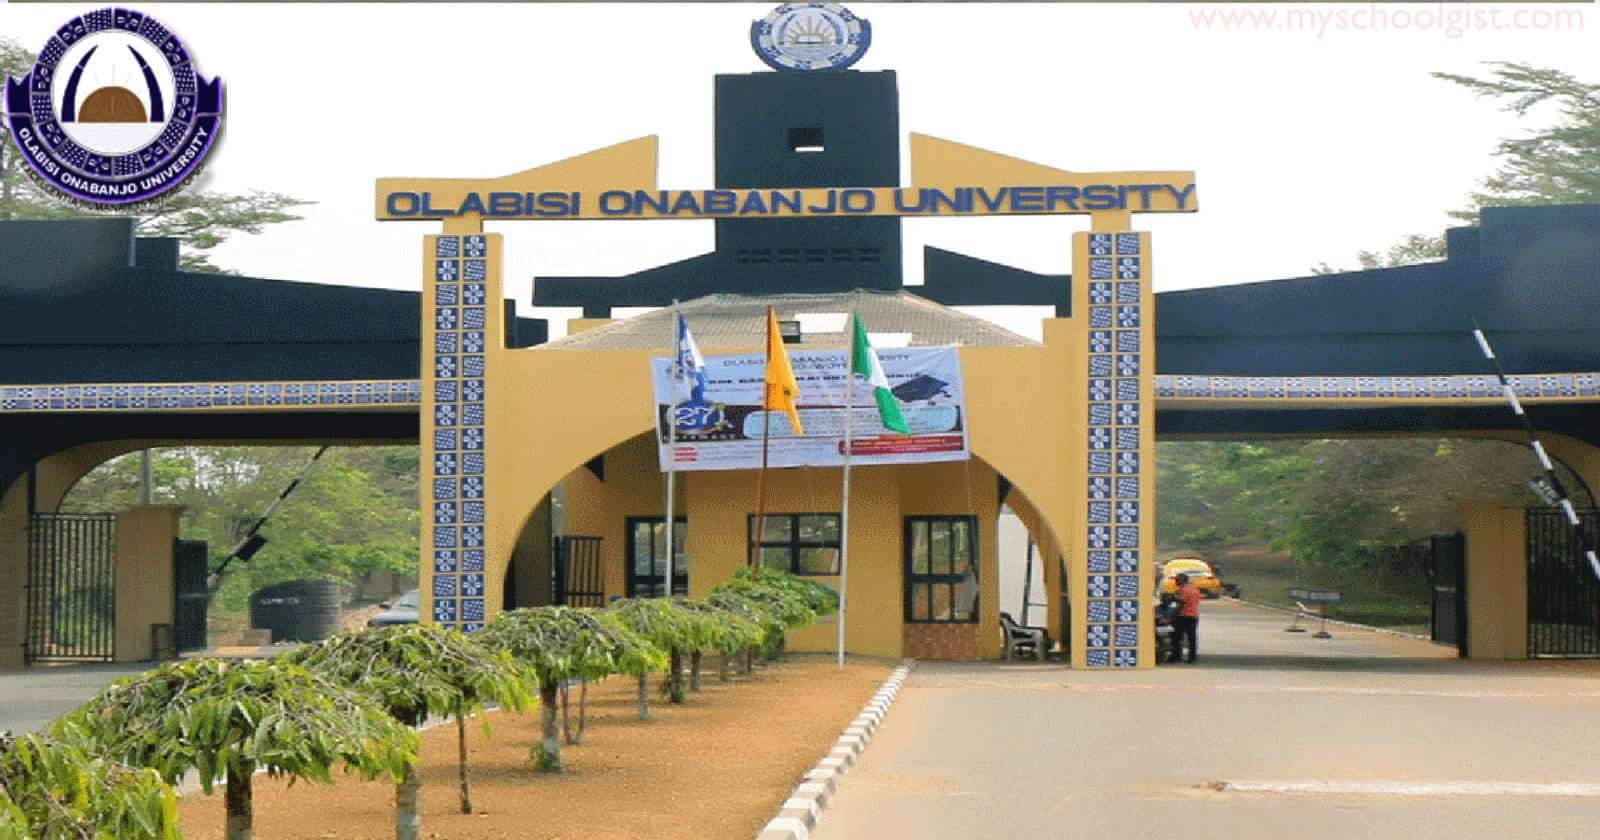 Olabisi Onabanjo University (OOU) 40th Foundation Anniversary